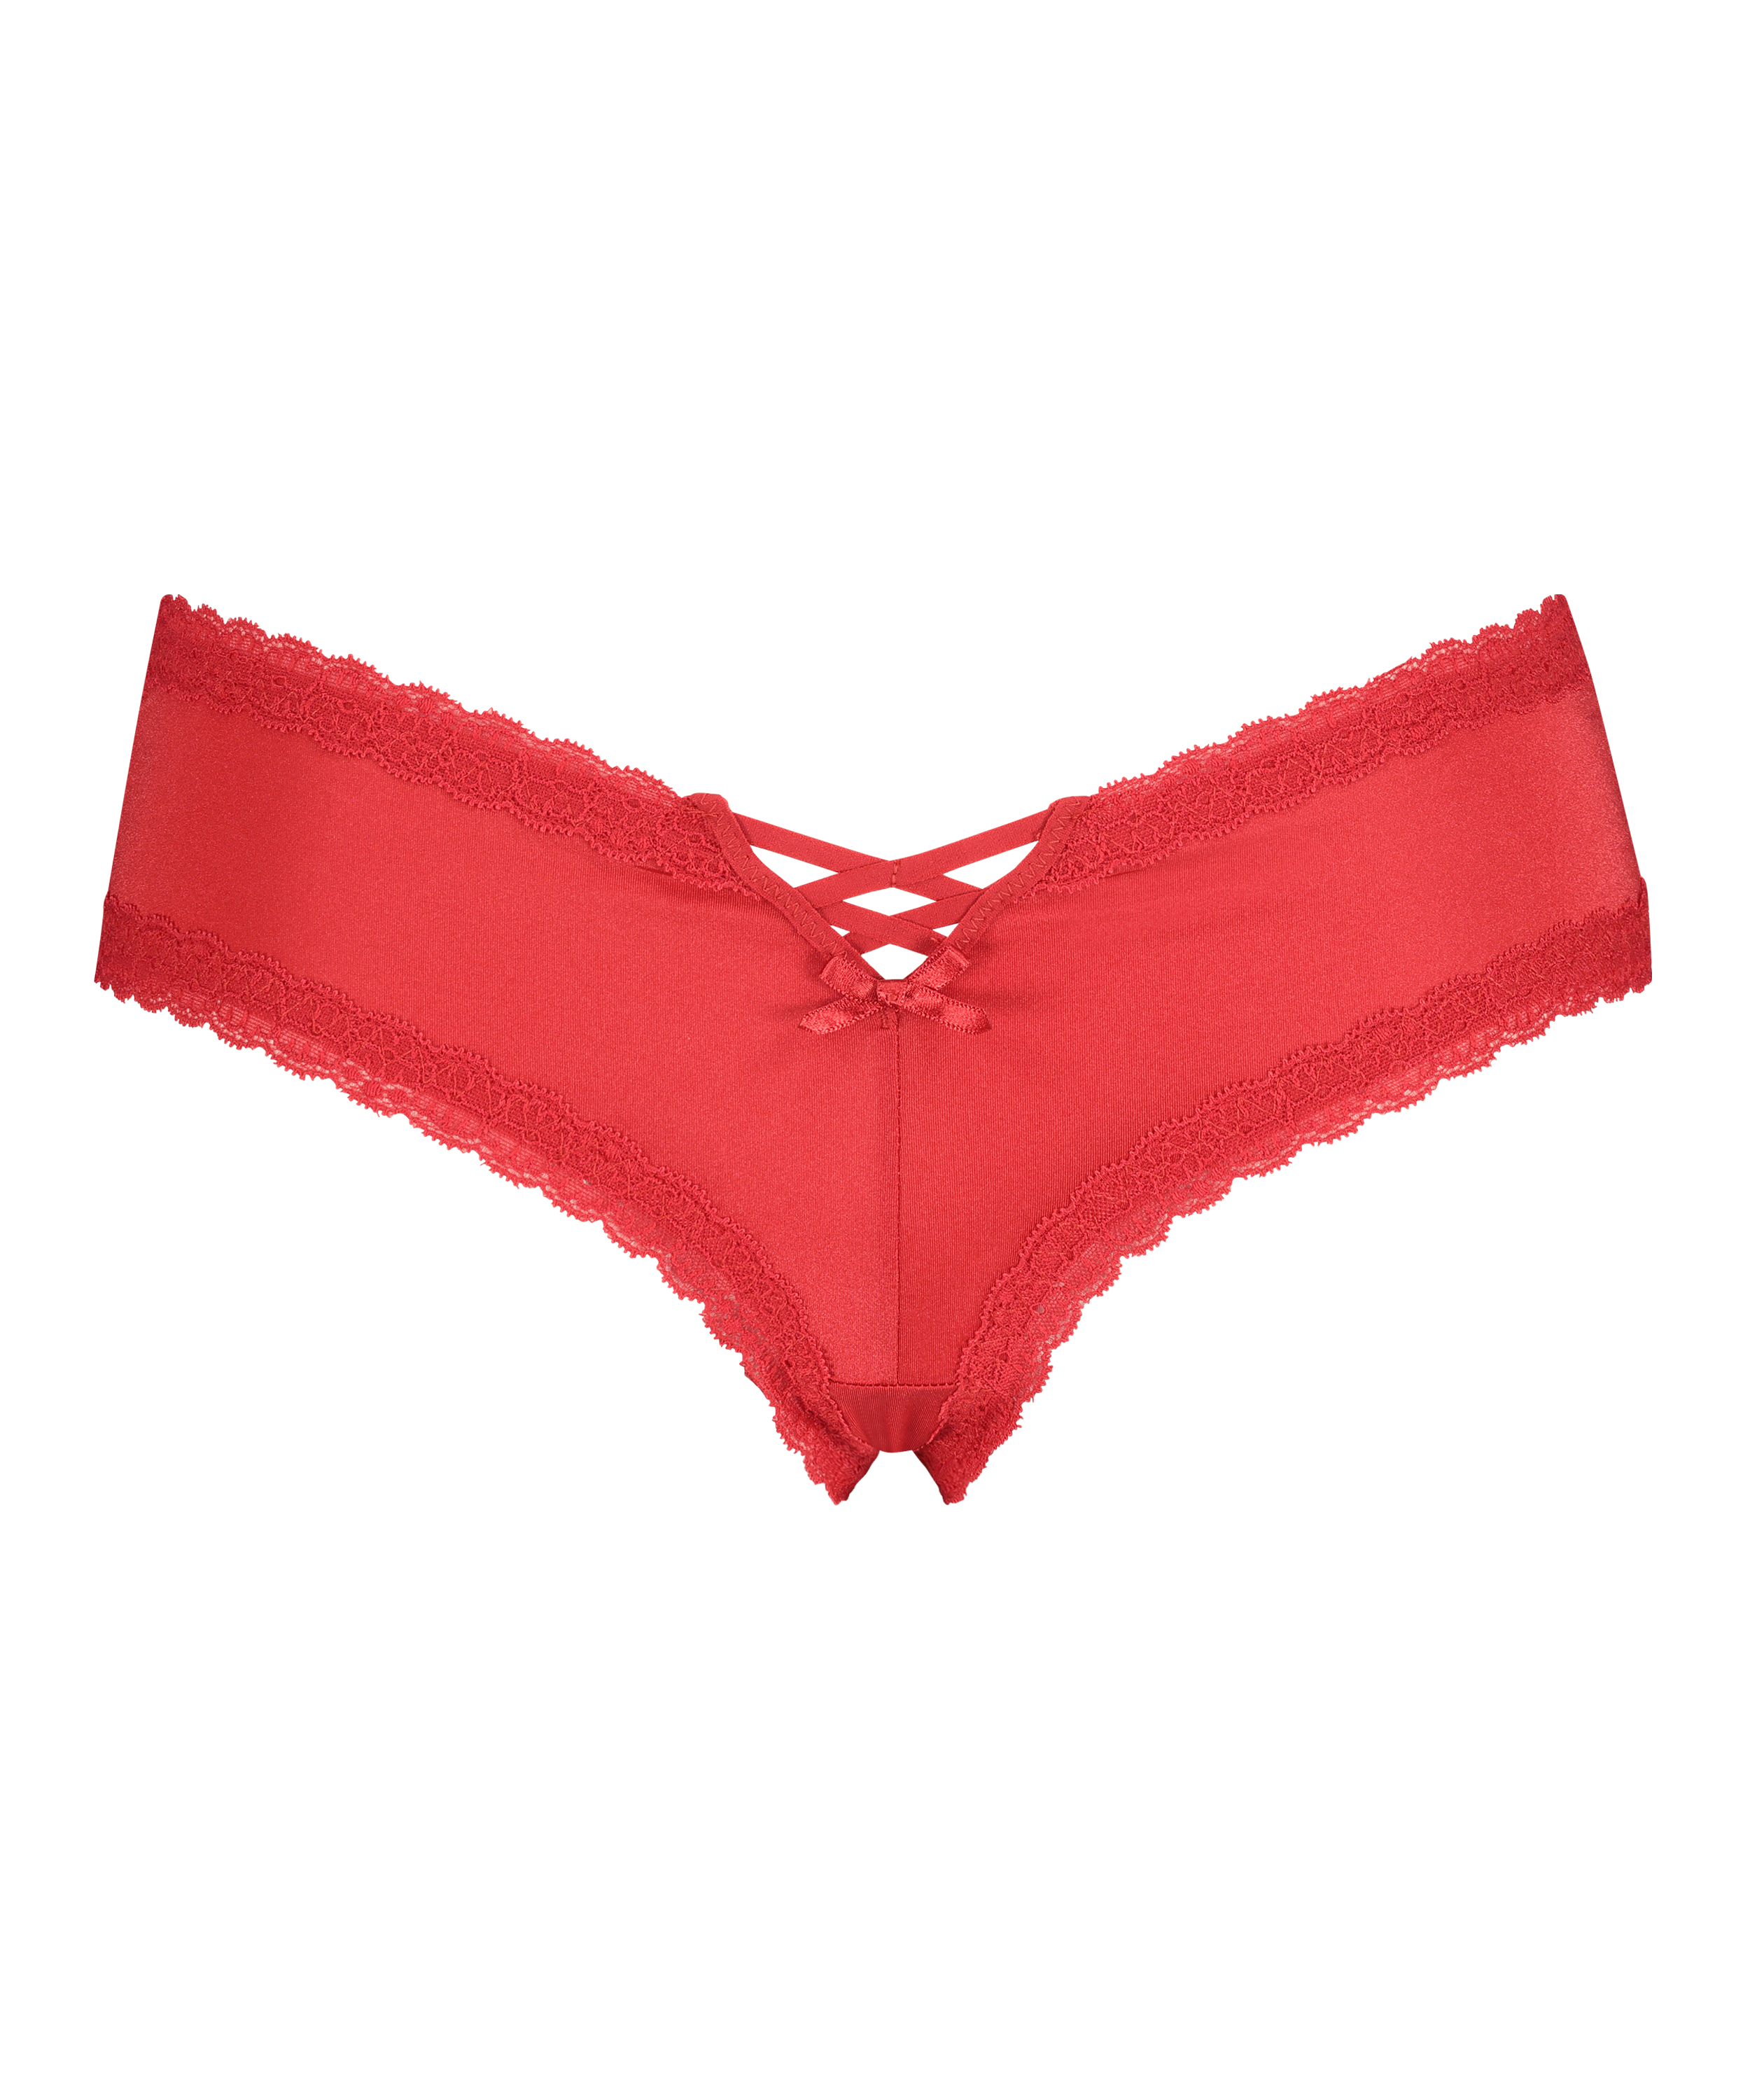 Vixen V-shaped Brazilian for €7.99 - Brazilian Panties - Hunkemöller